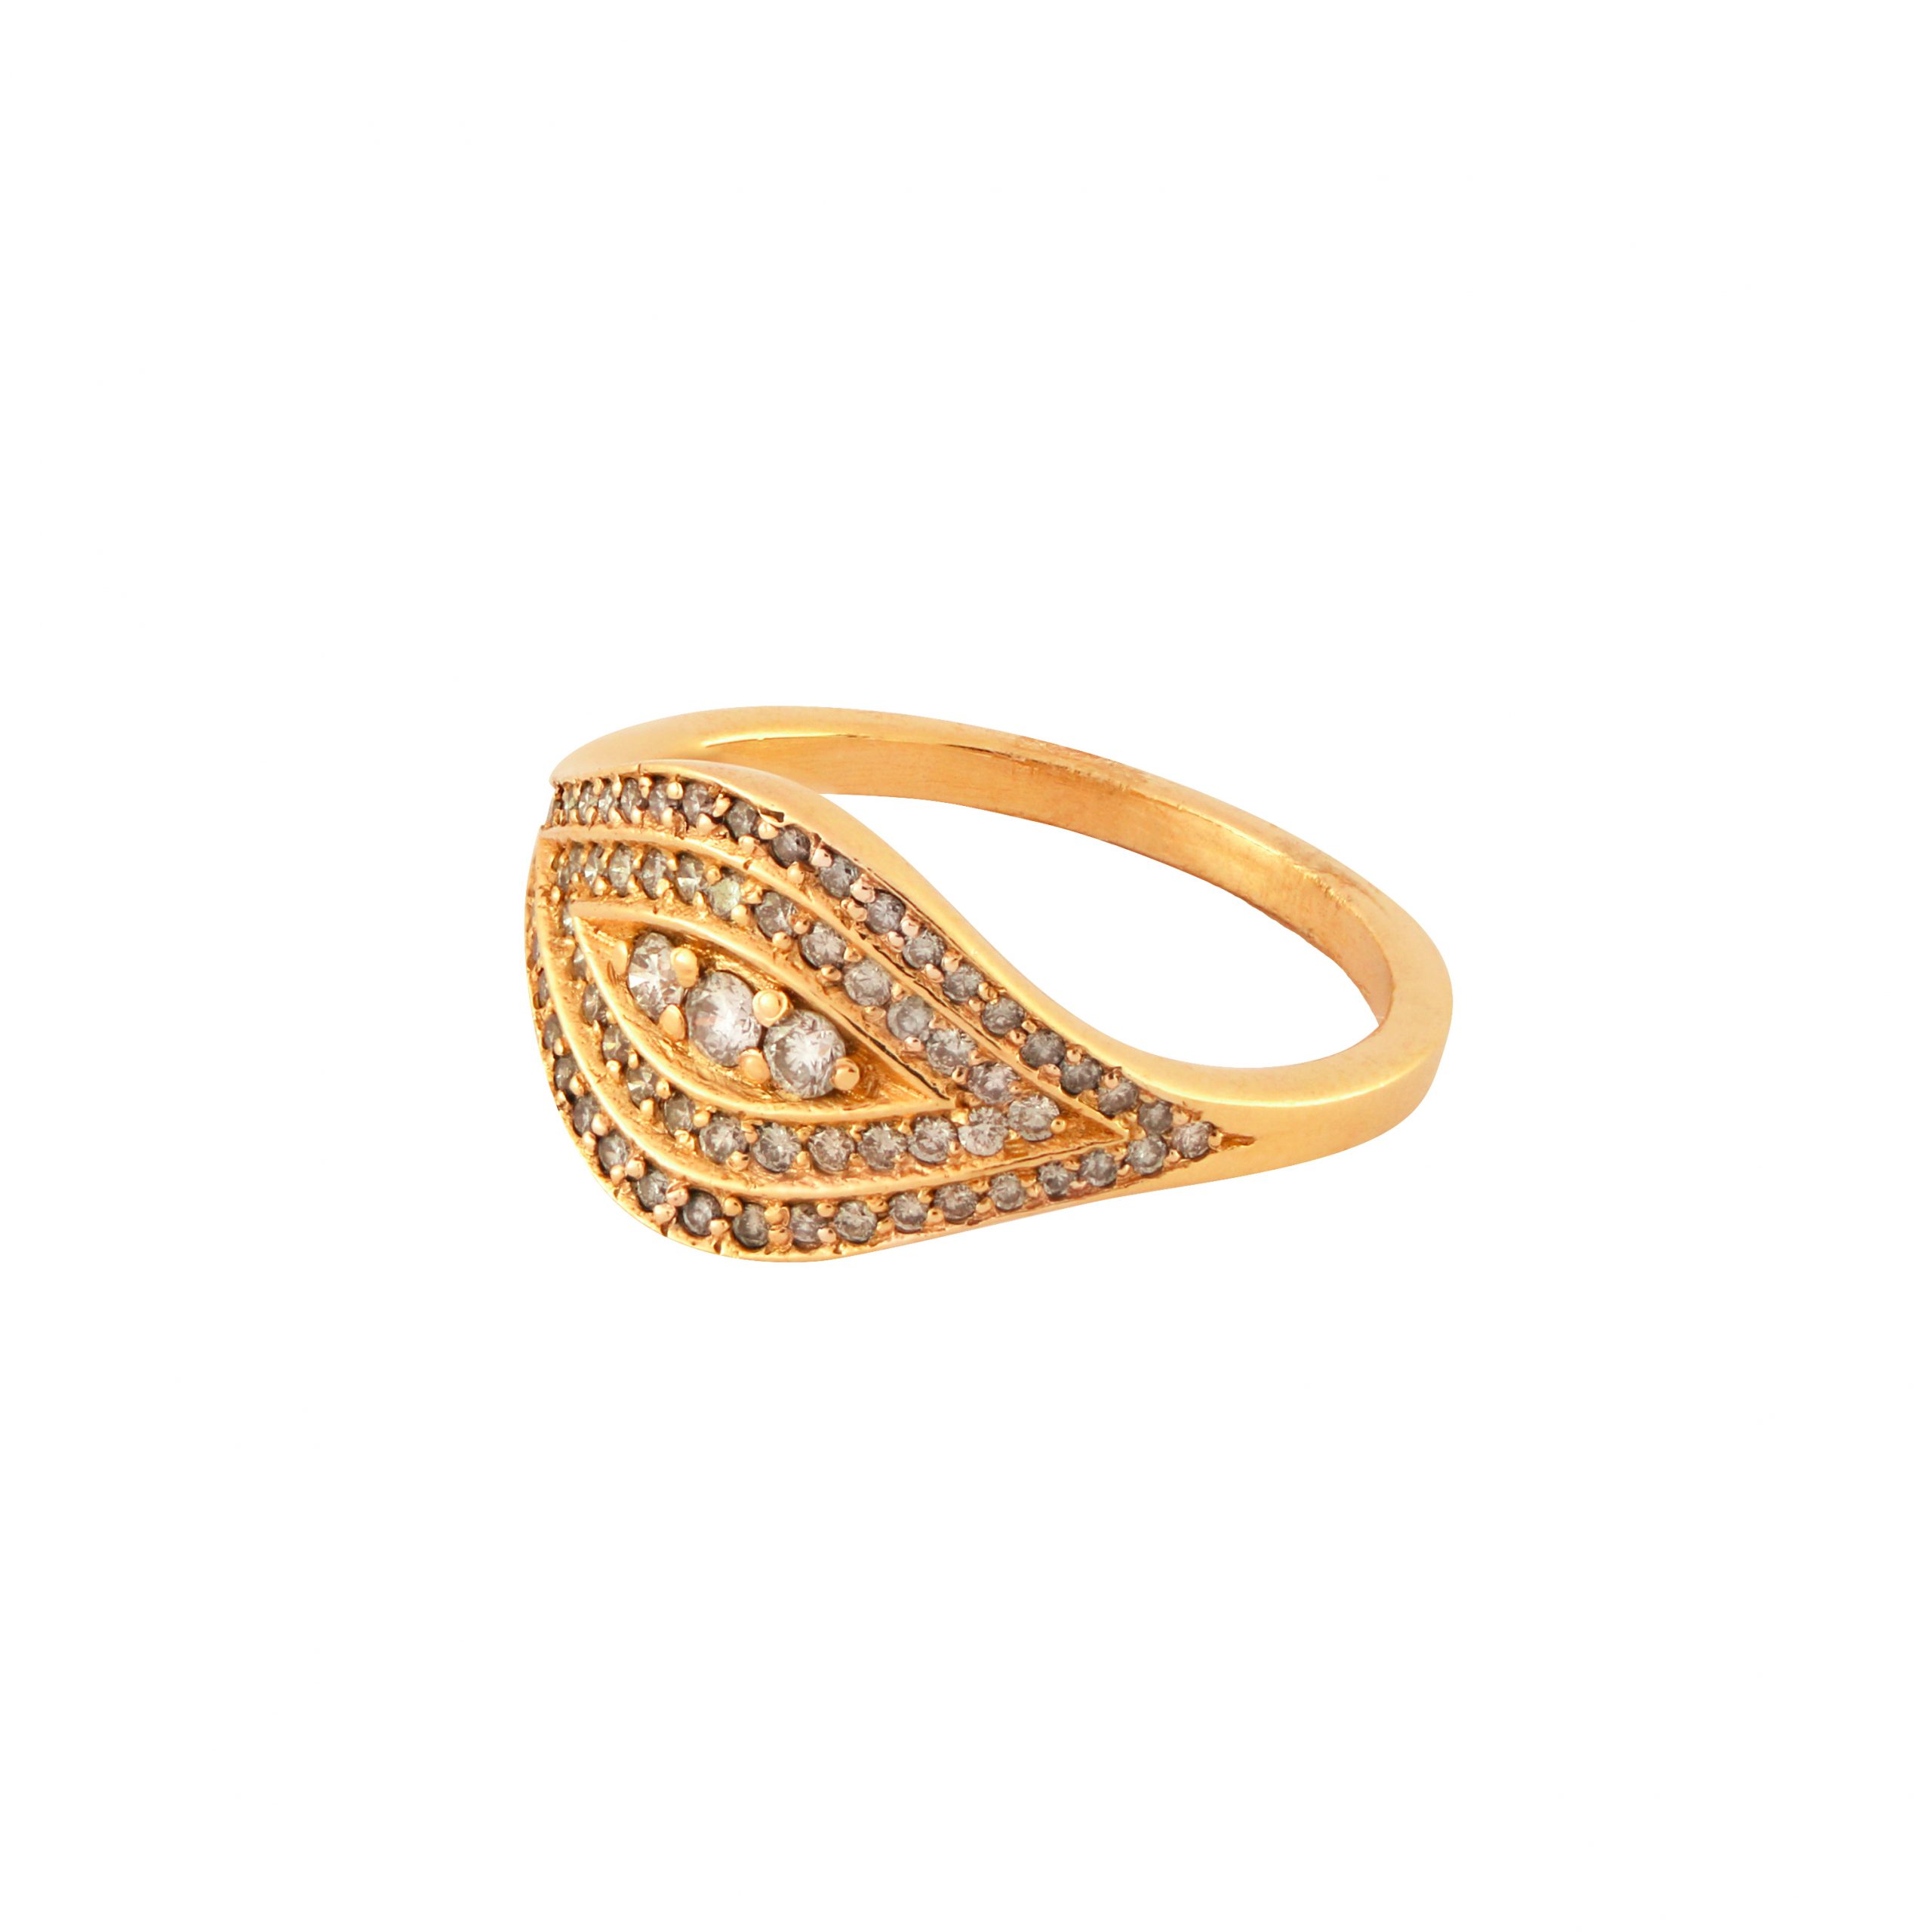 Buy quality Gold 22.k Simple Design Ladies Ring in Ahmedabad